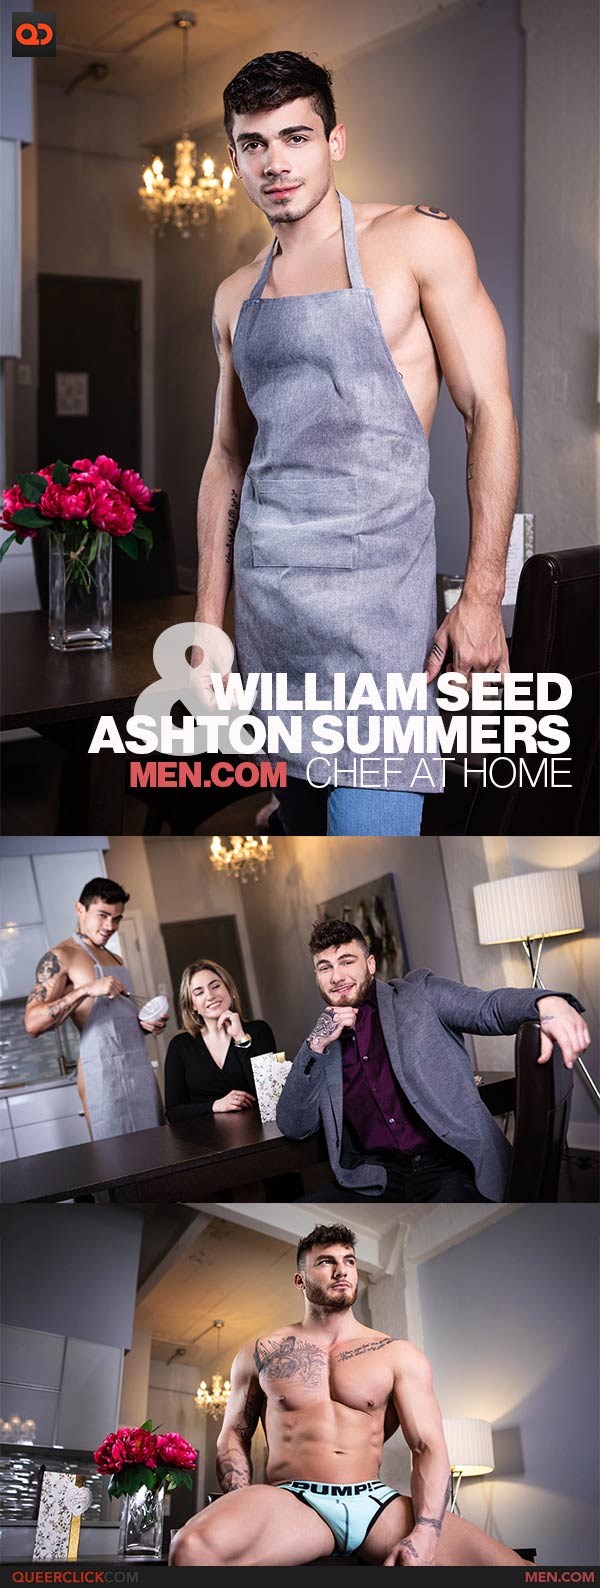 Men.com: William Seed and Ashton Summers